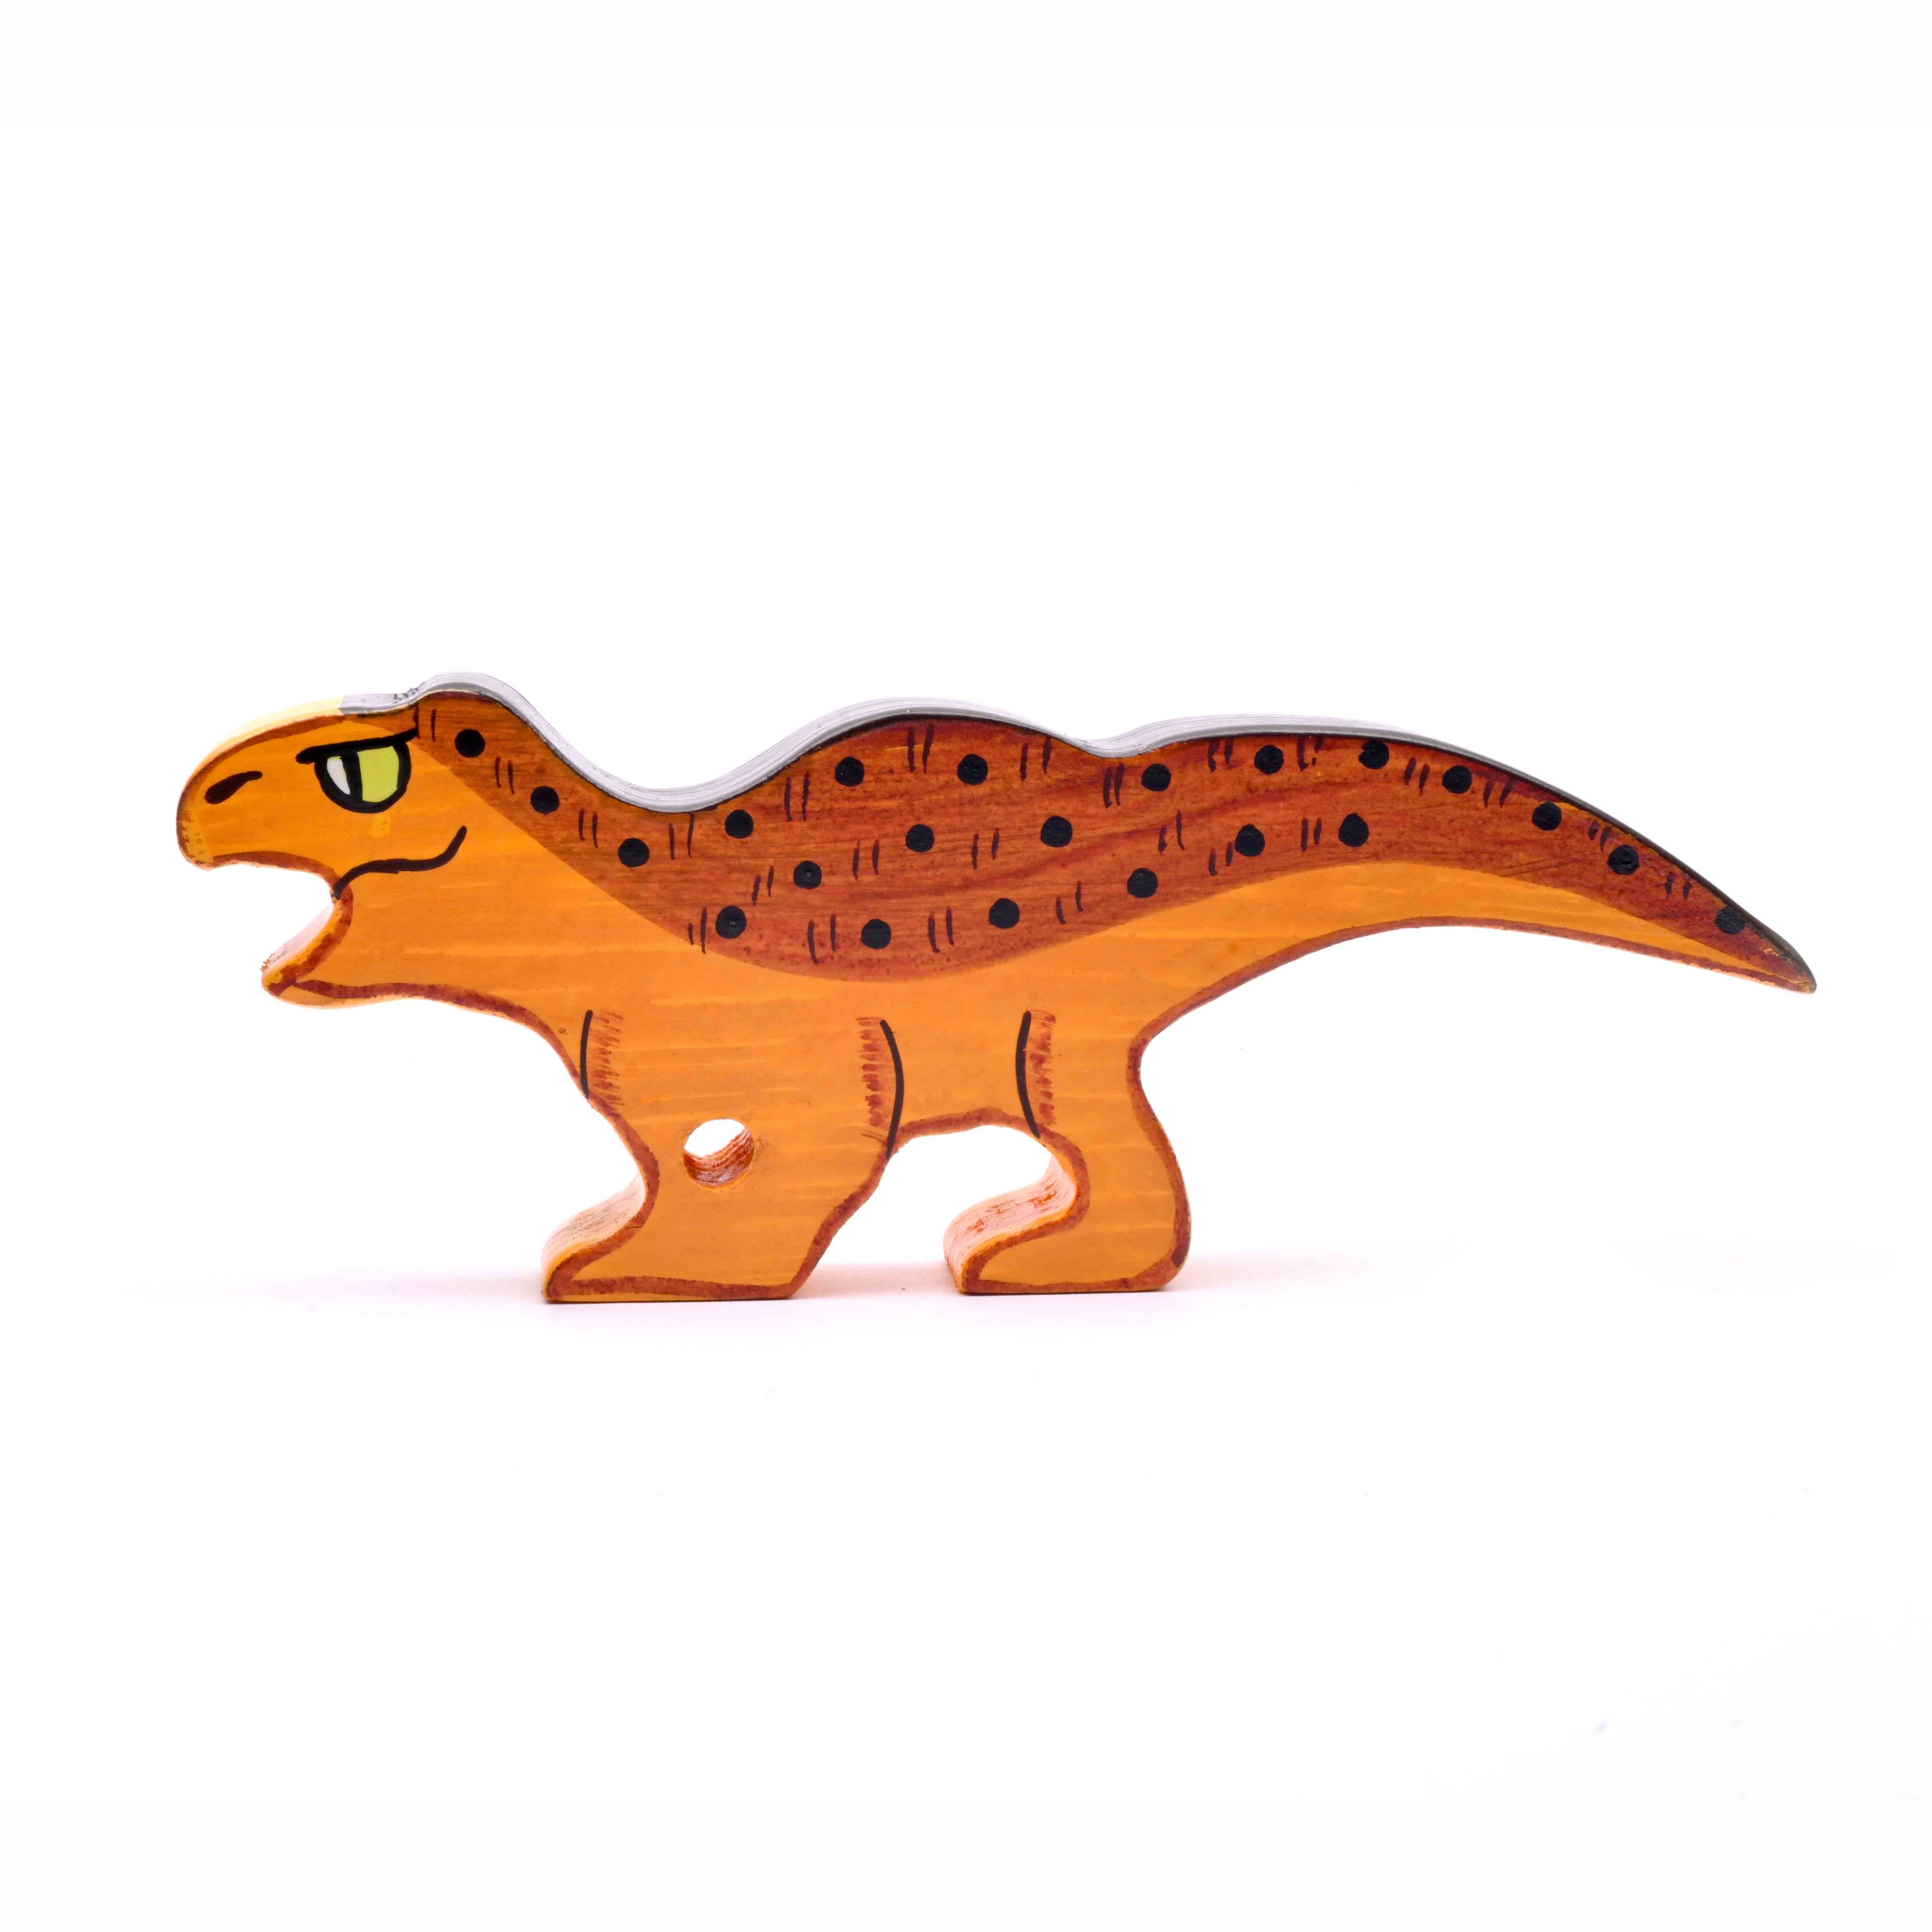 NESTA TOYS - Dinosaur World (9 Piece)